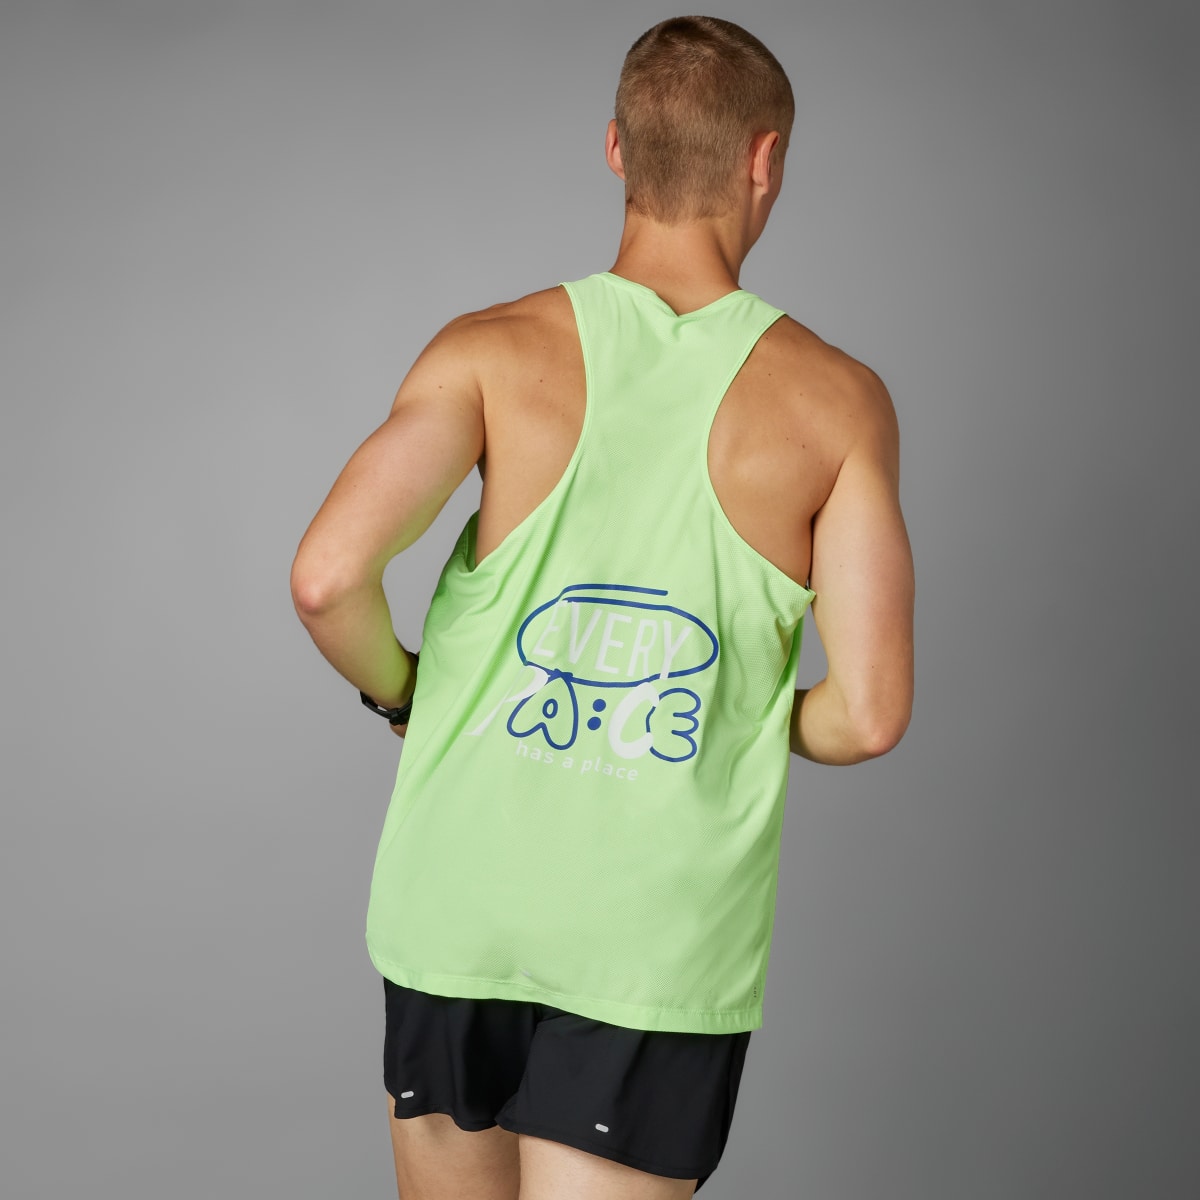 Adidas Camiseta sin mangas Own the Run adidas Runners. 6